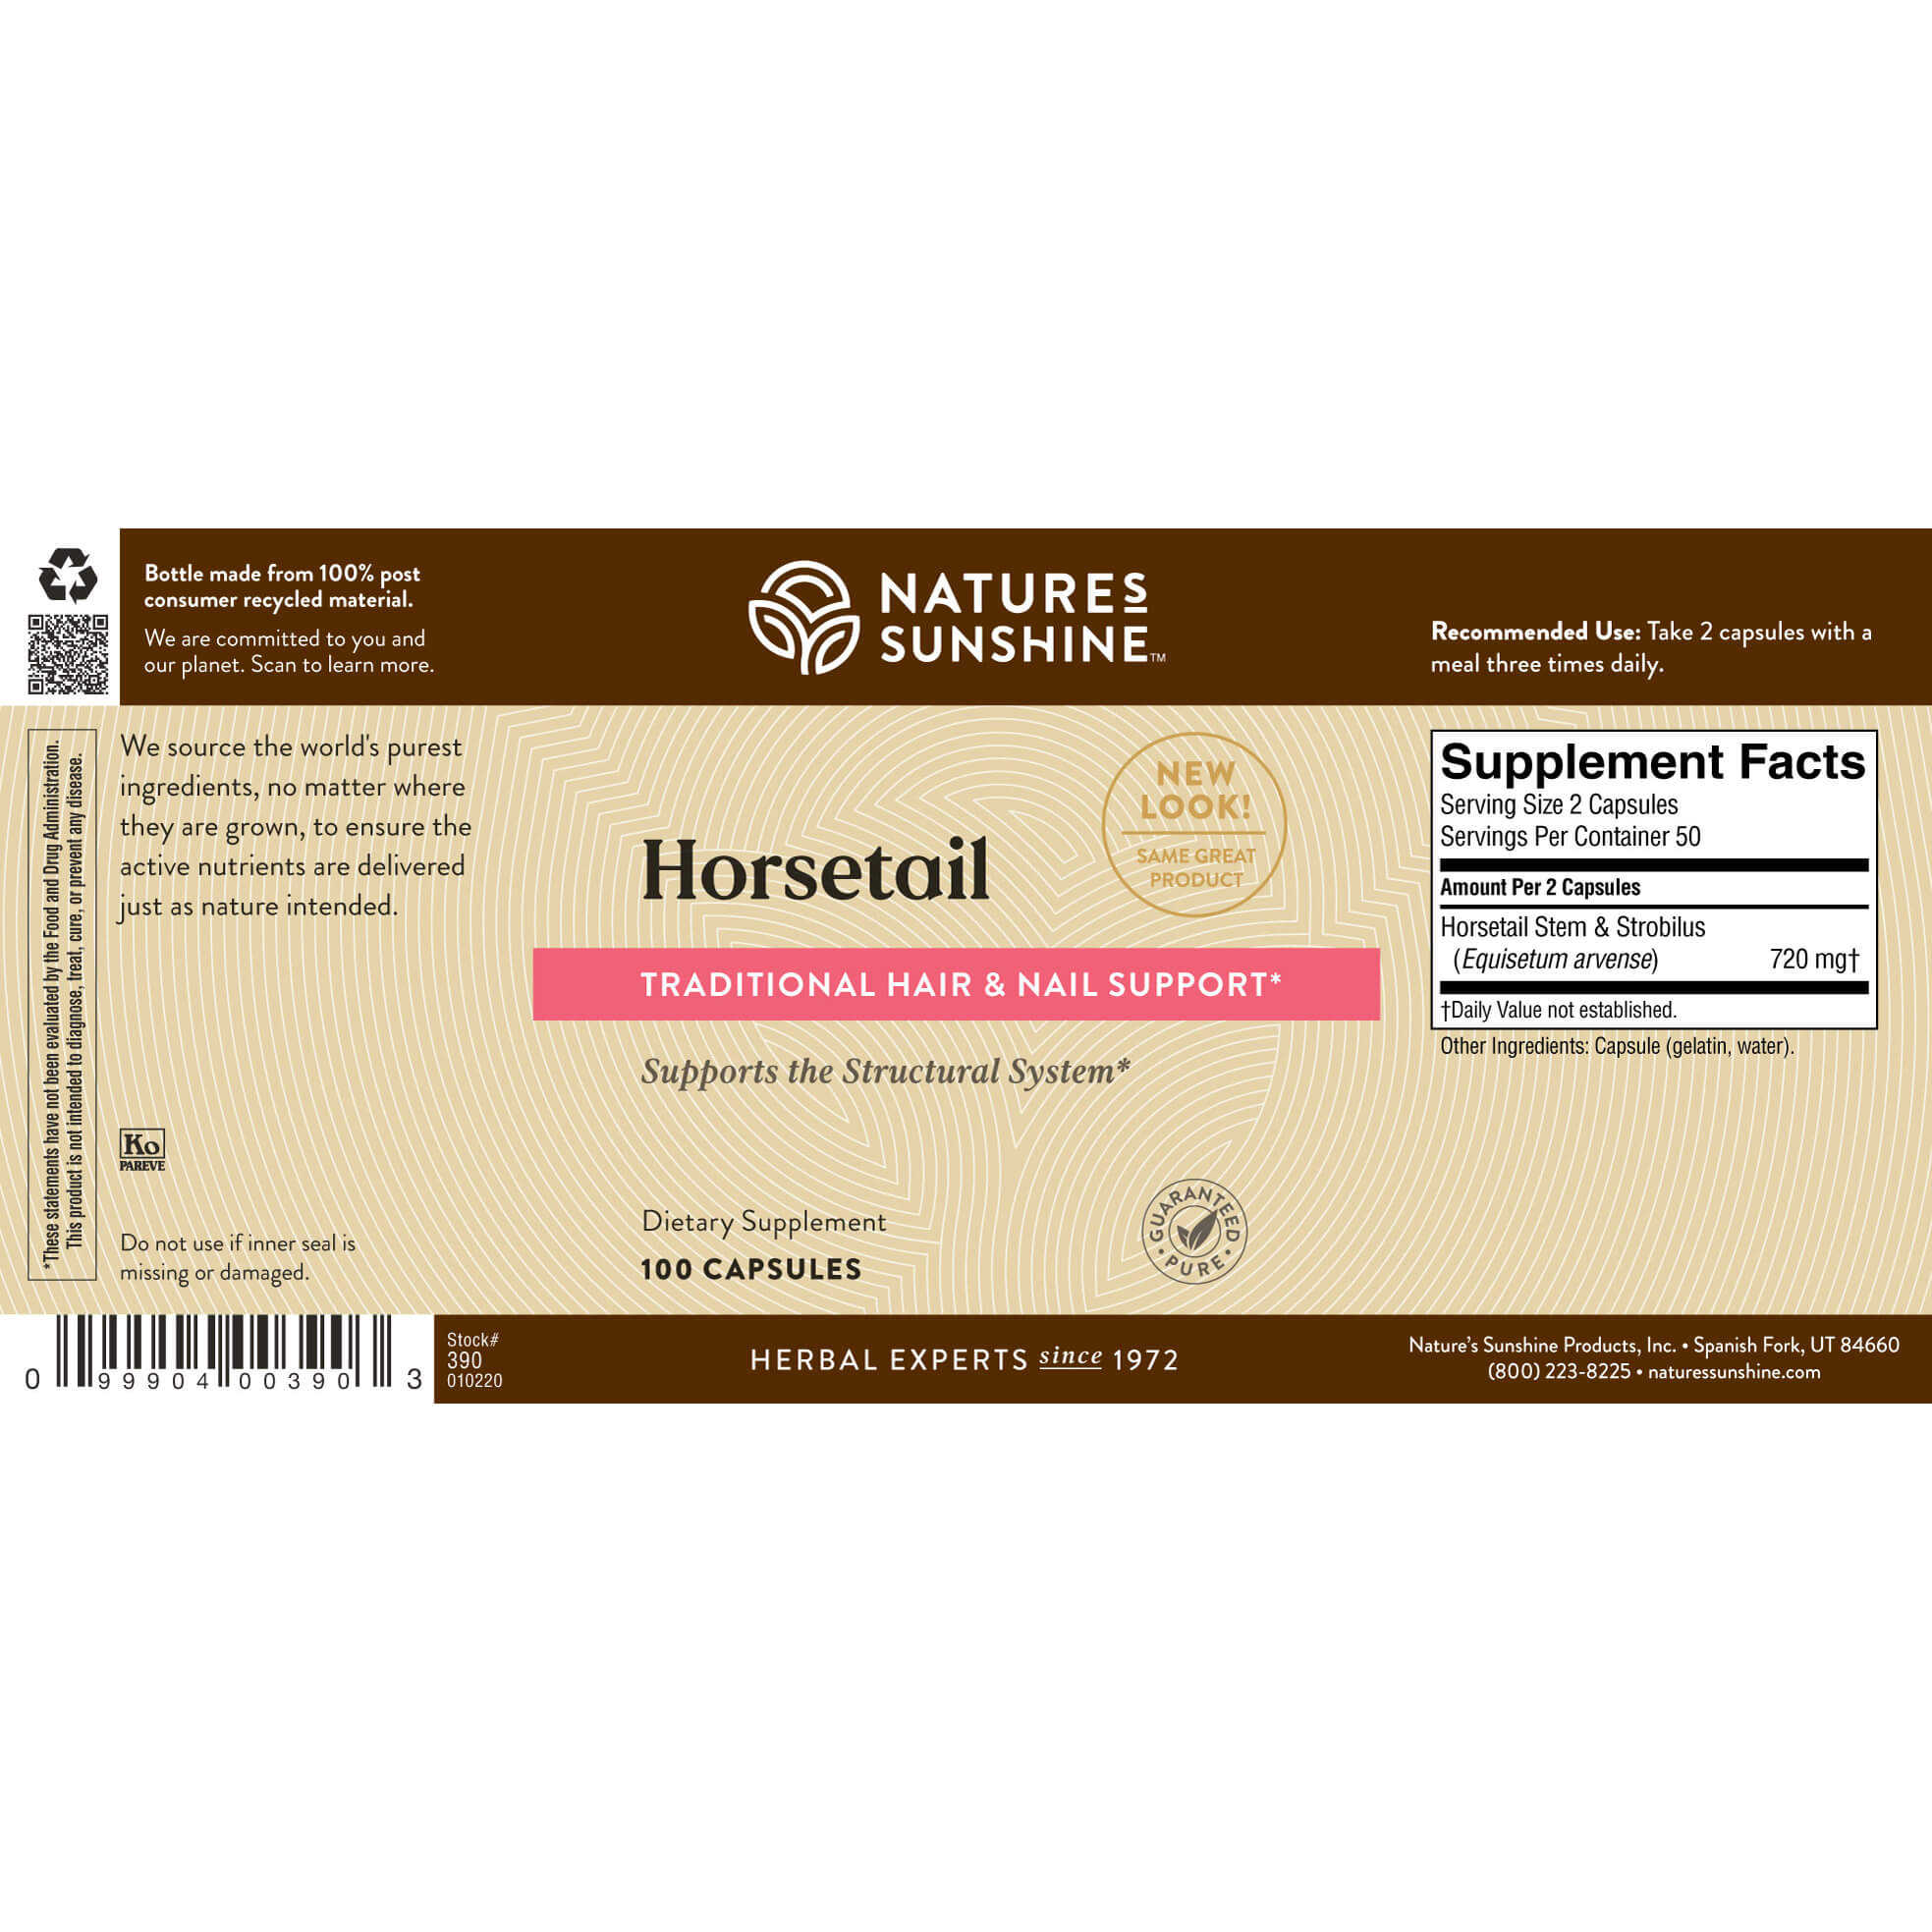 Horsetail